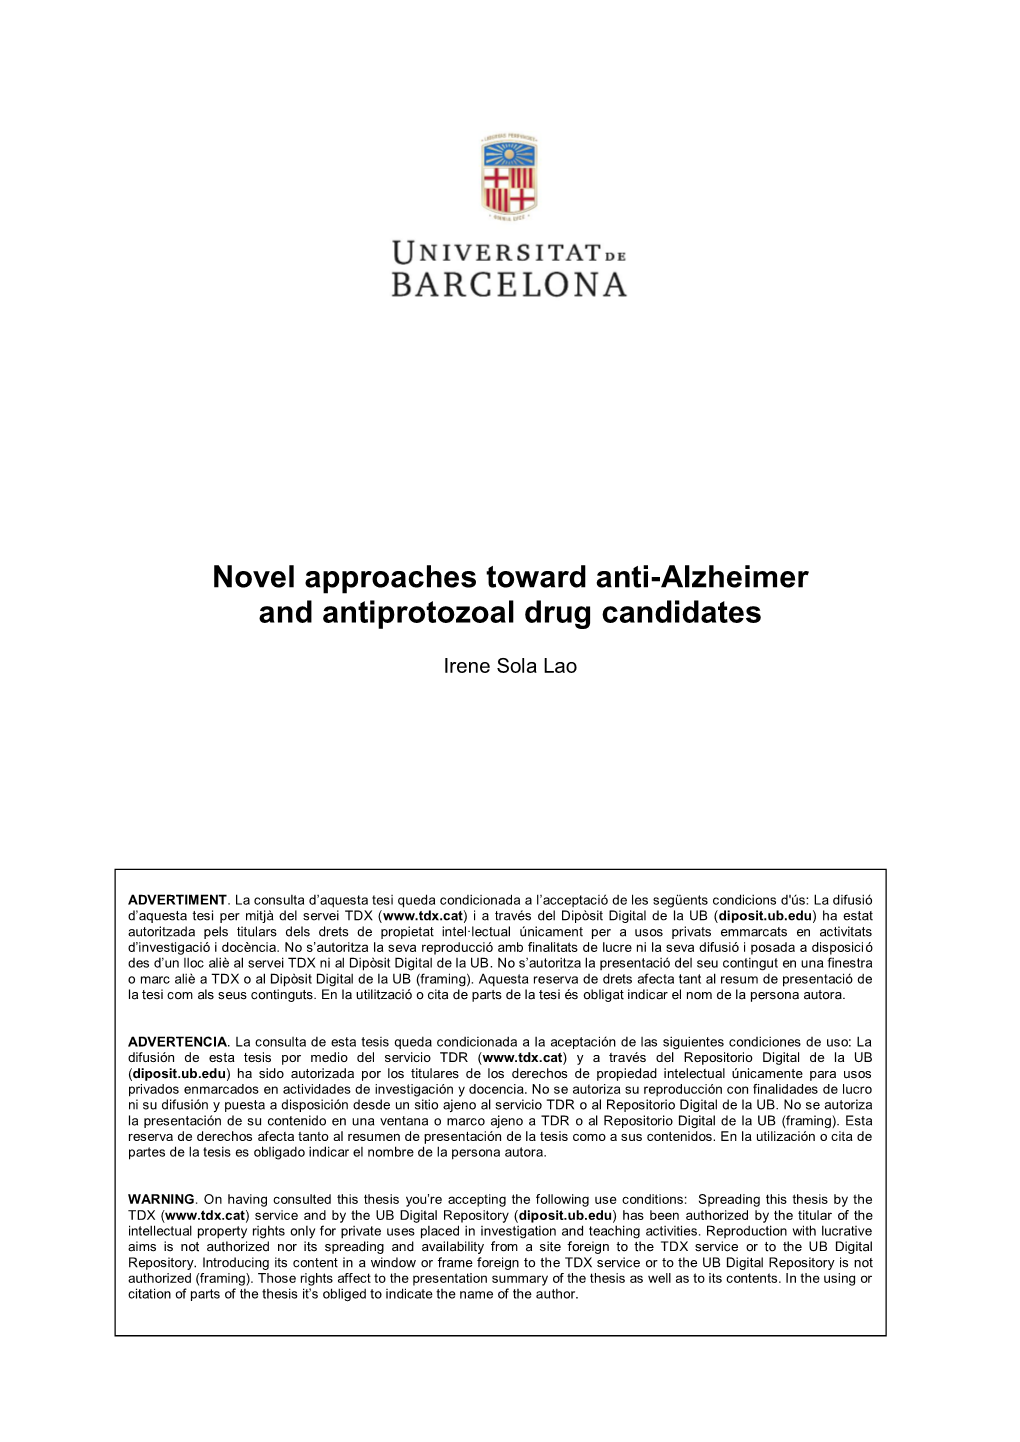 Novel Approaches Toward Anti-Alzheimer and Antiprotozoal